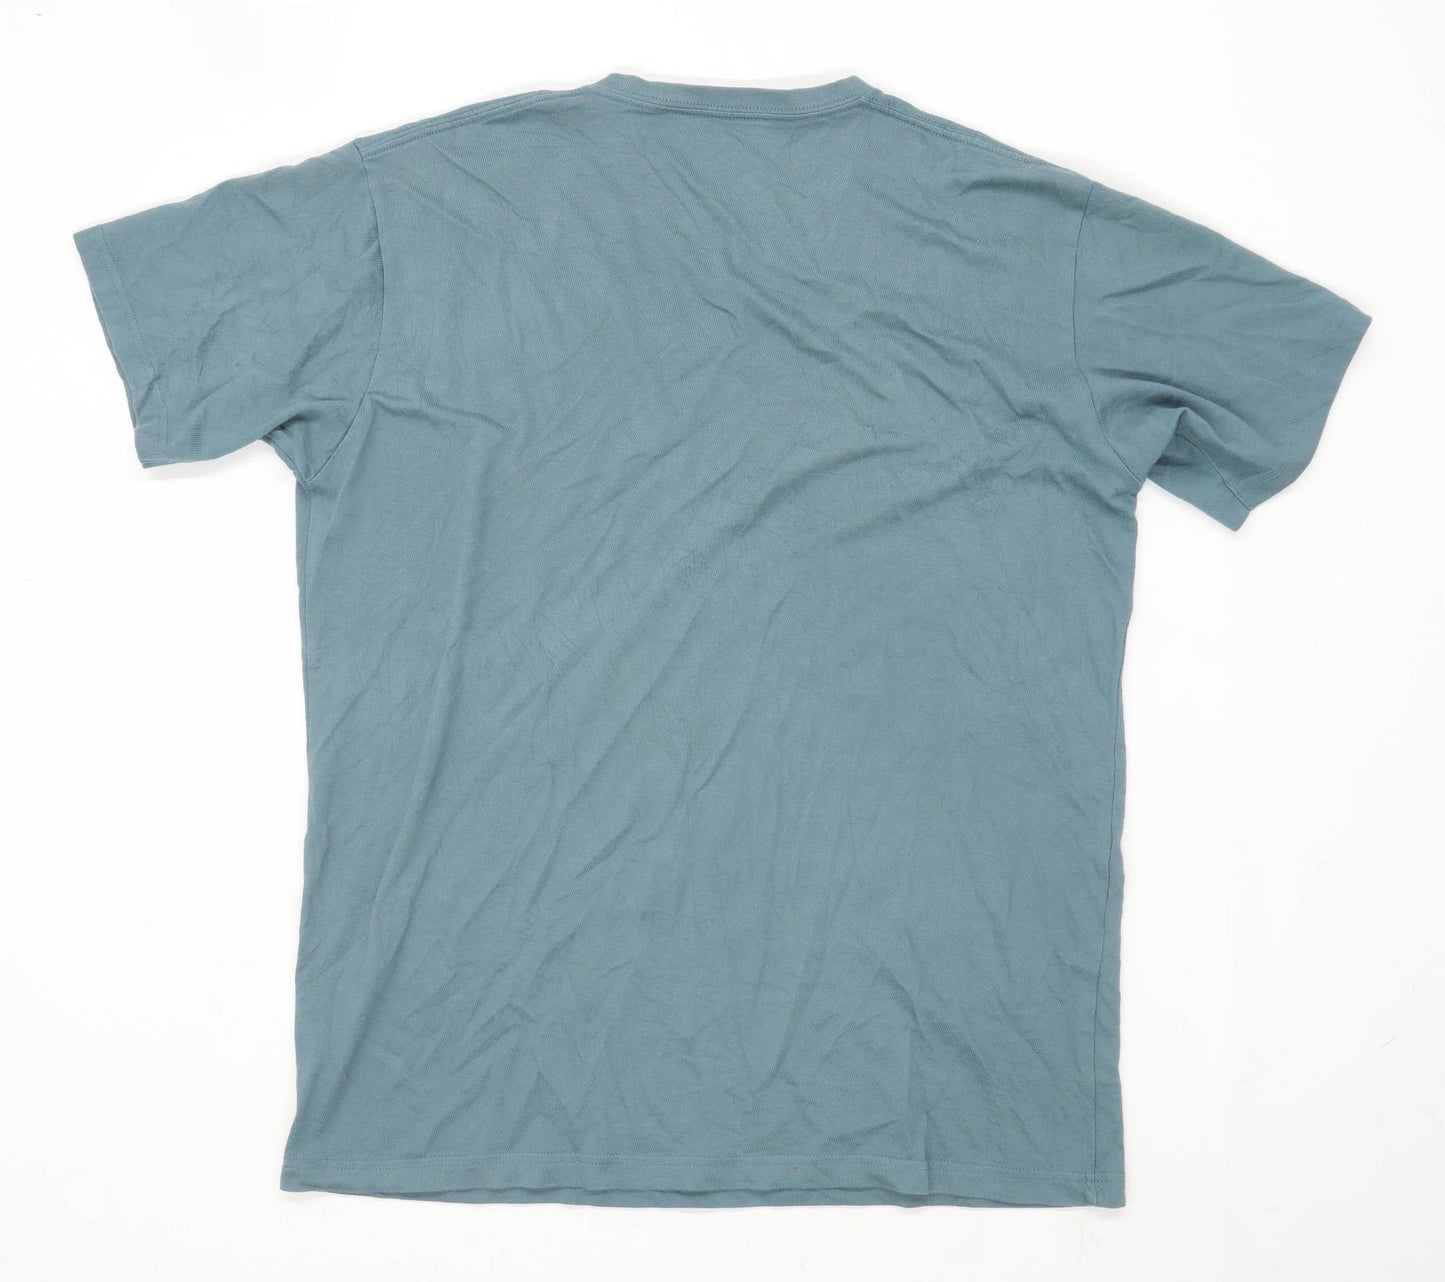 Uniqlo Mens Size L Cotton Blend Green T-Shirt